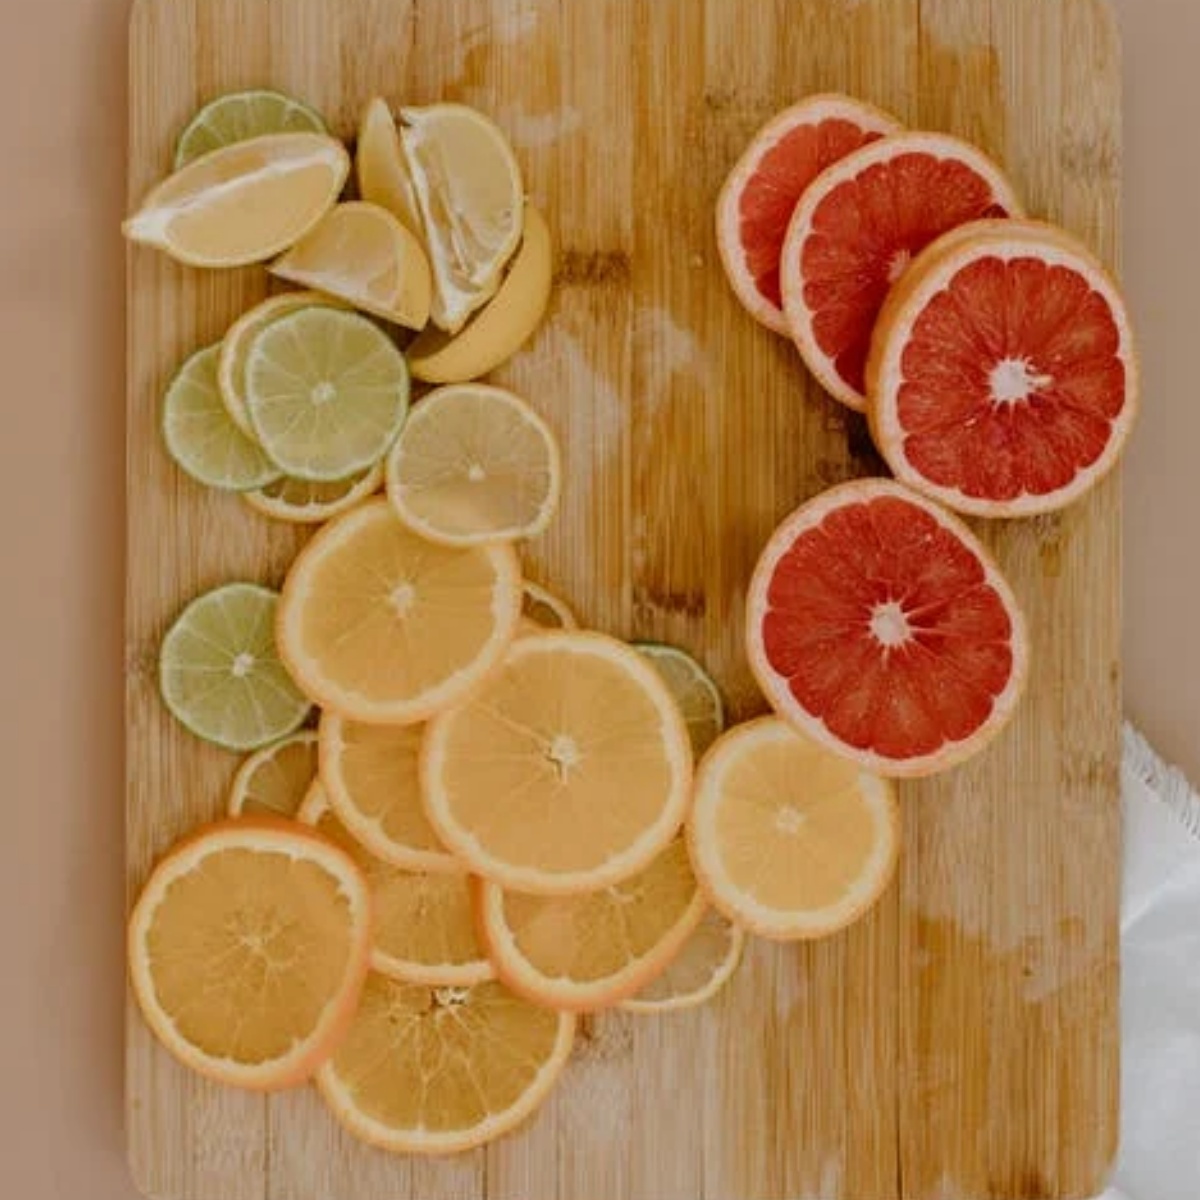 arancia e limone a fette